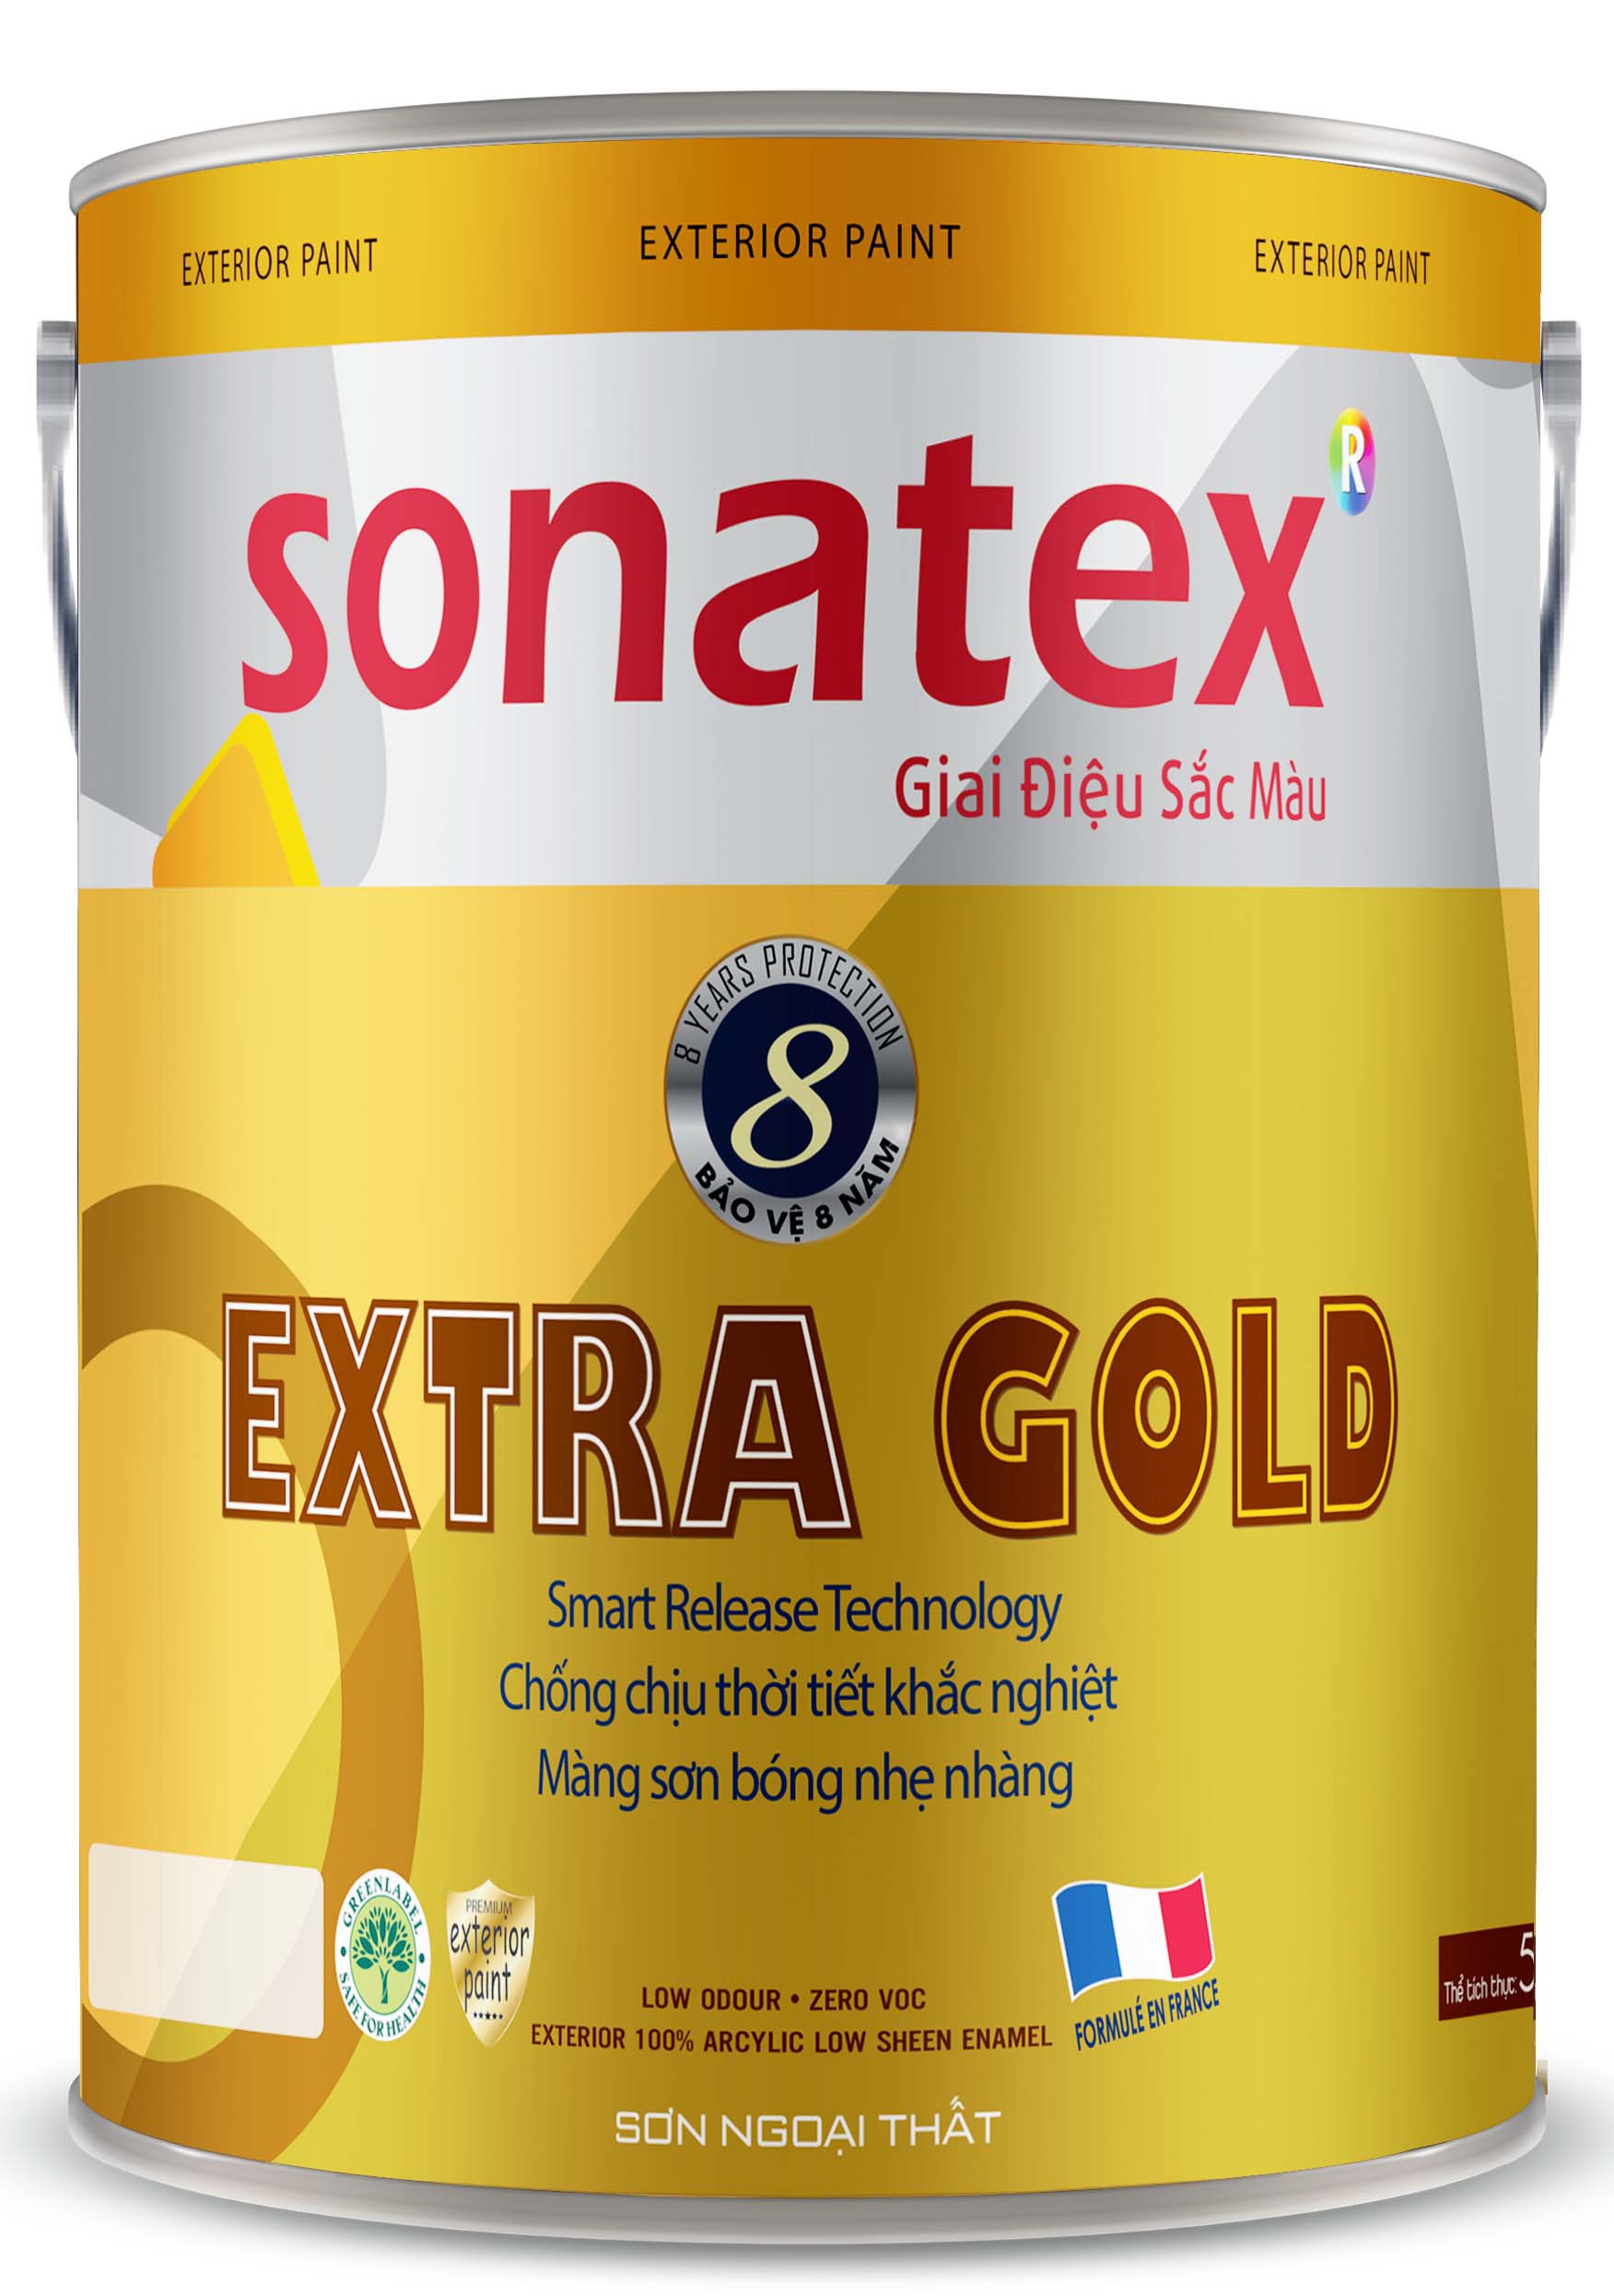 SONATEX EXTRA GOLD